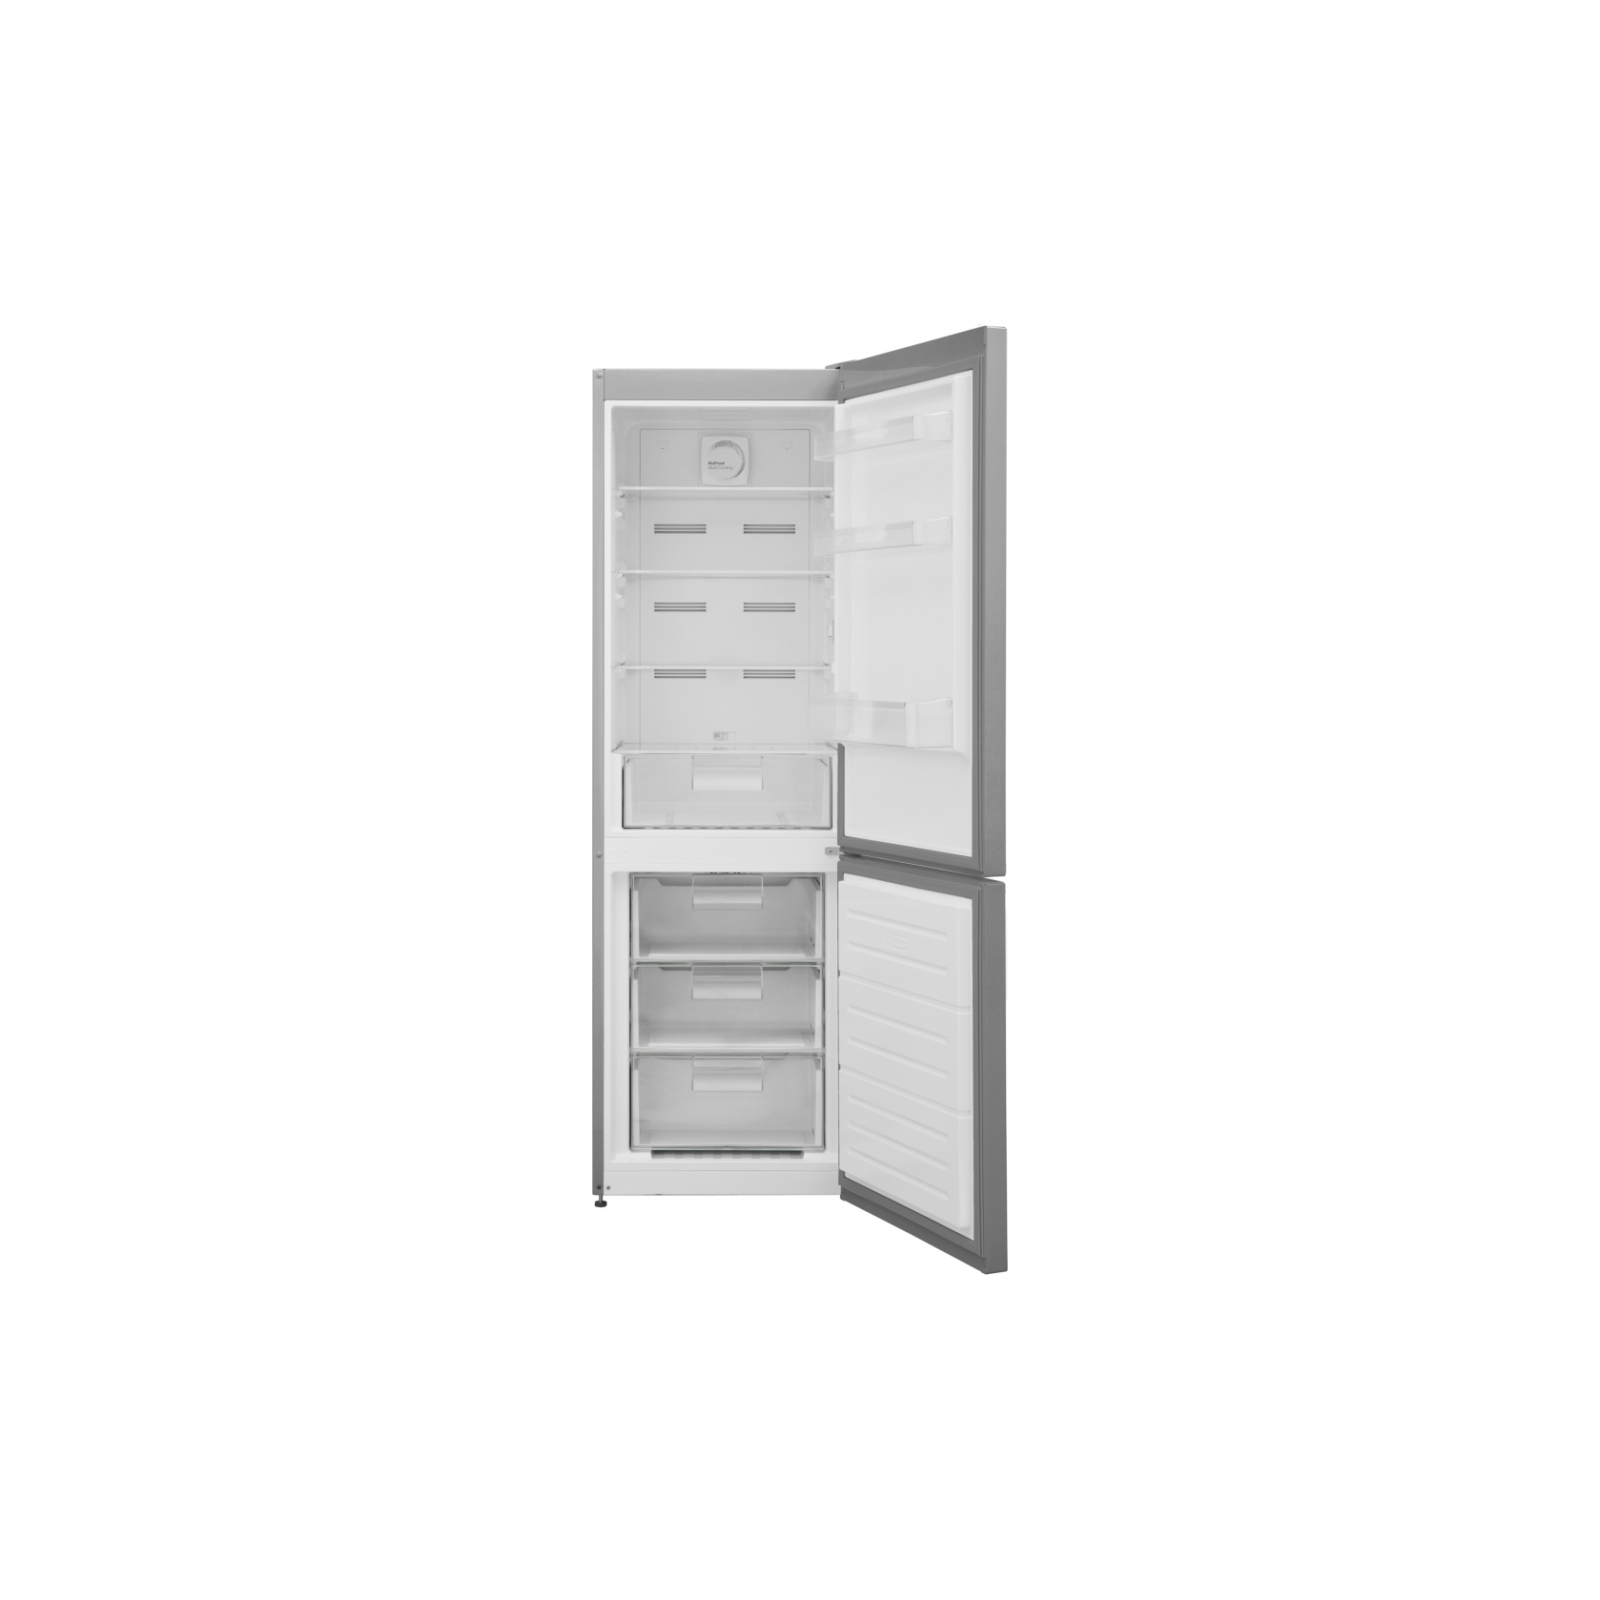 Холодильник HEINNER HCNF-V291SF+ изображение 2